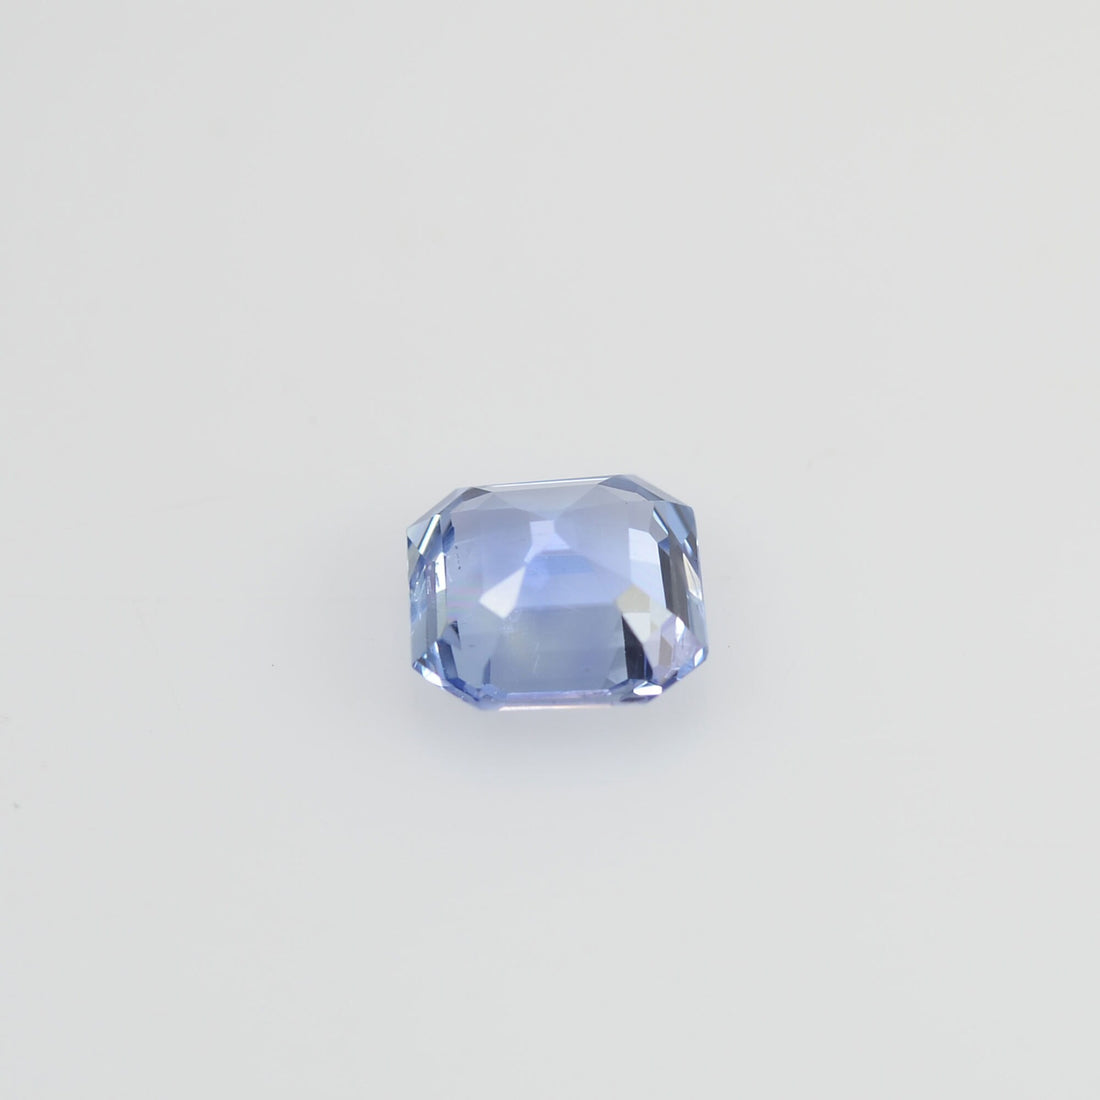 1.41 Cts Natural Blue Sapphire Loose Pair Gemstone Octagon Cut